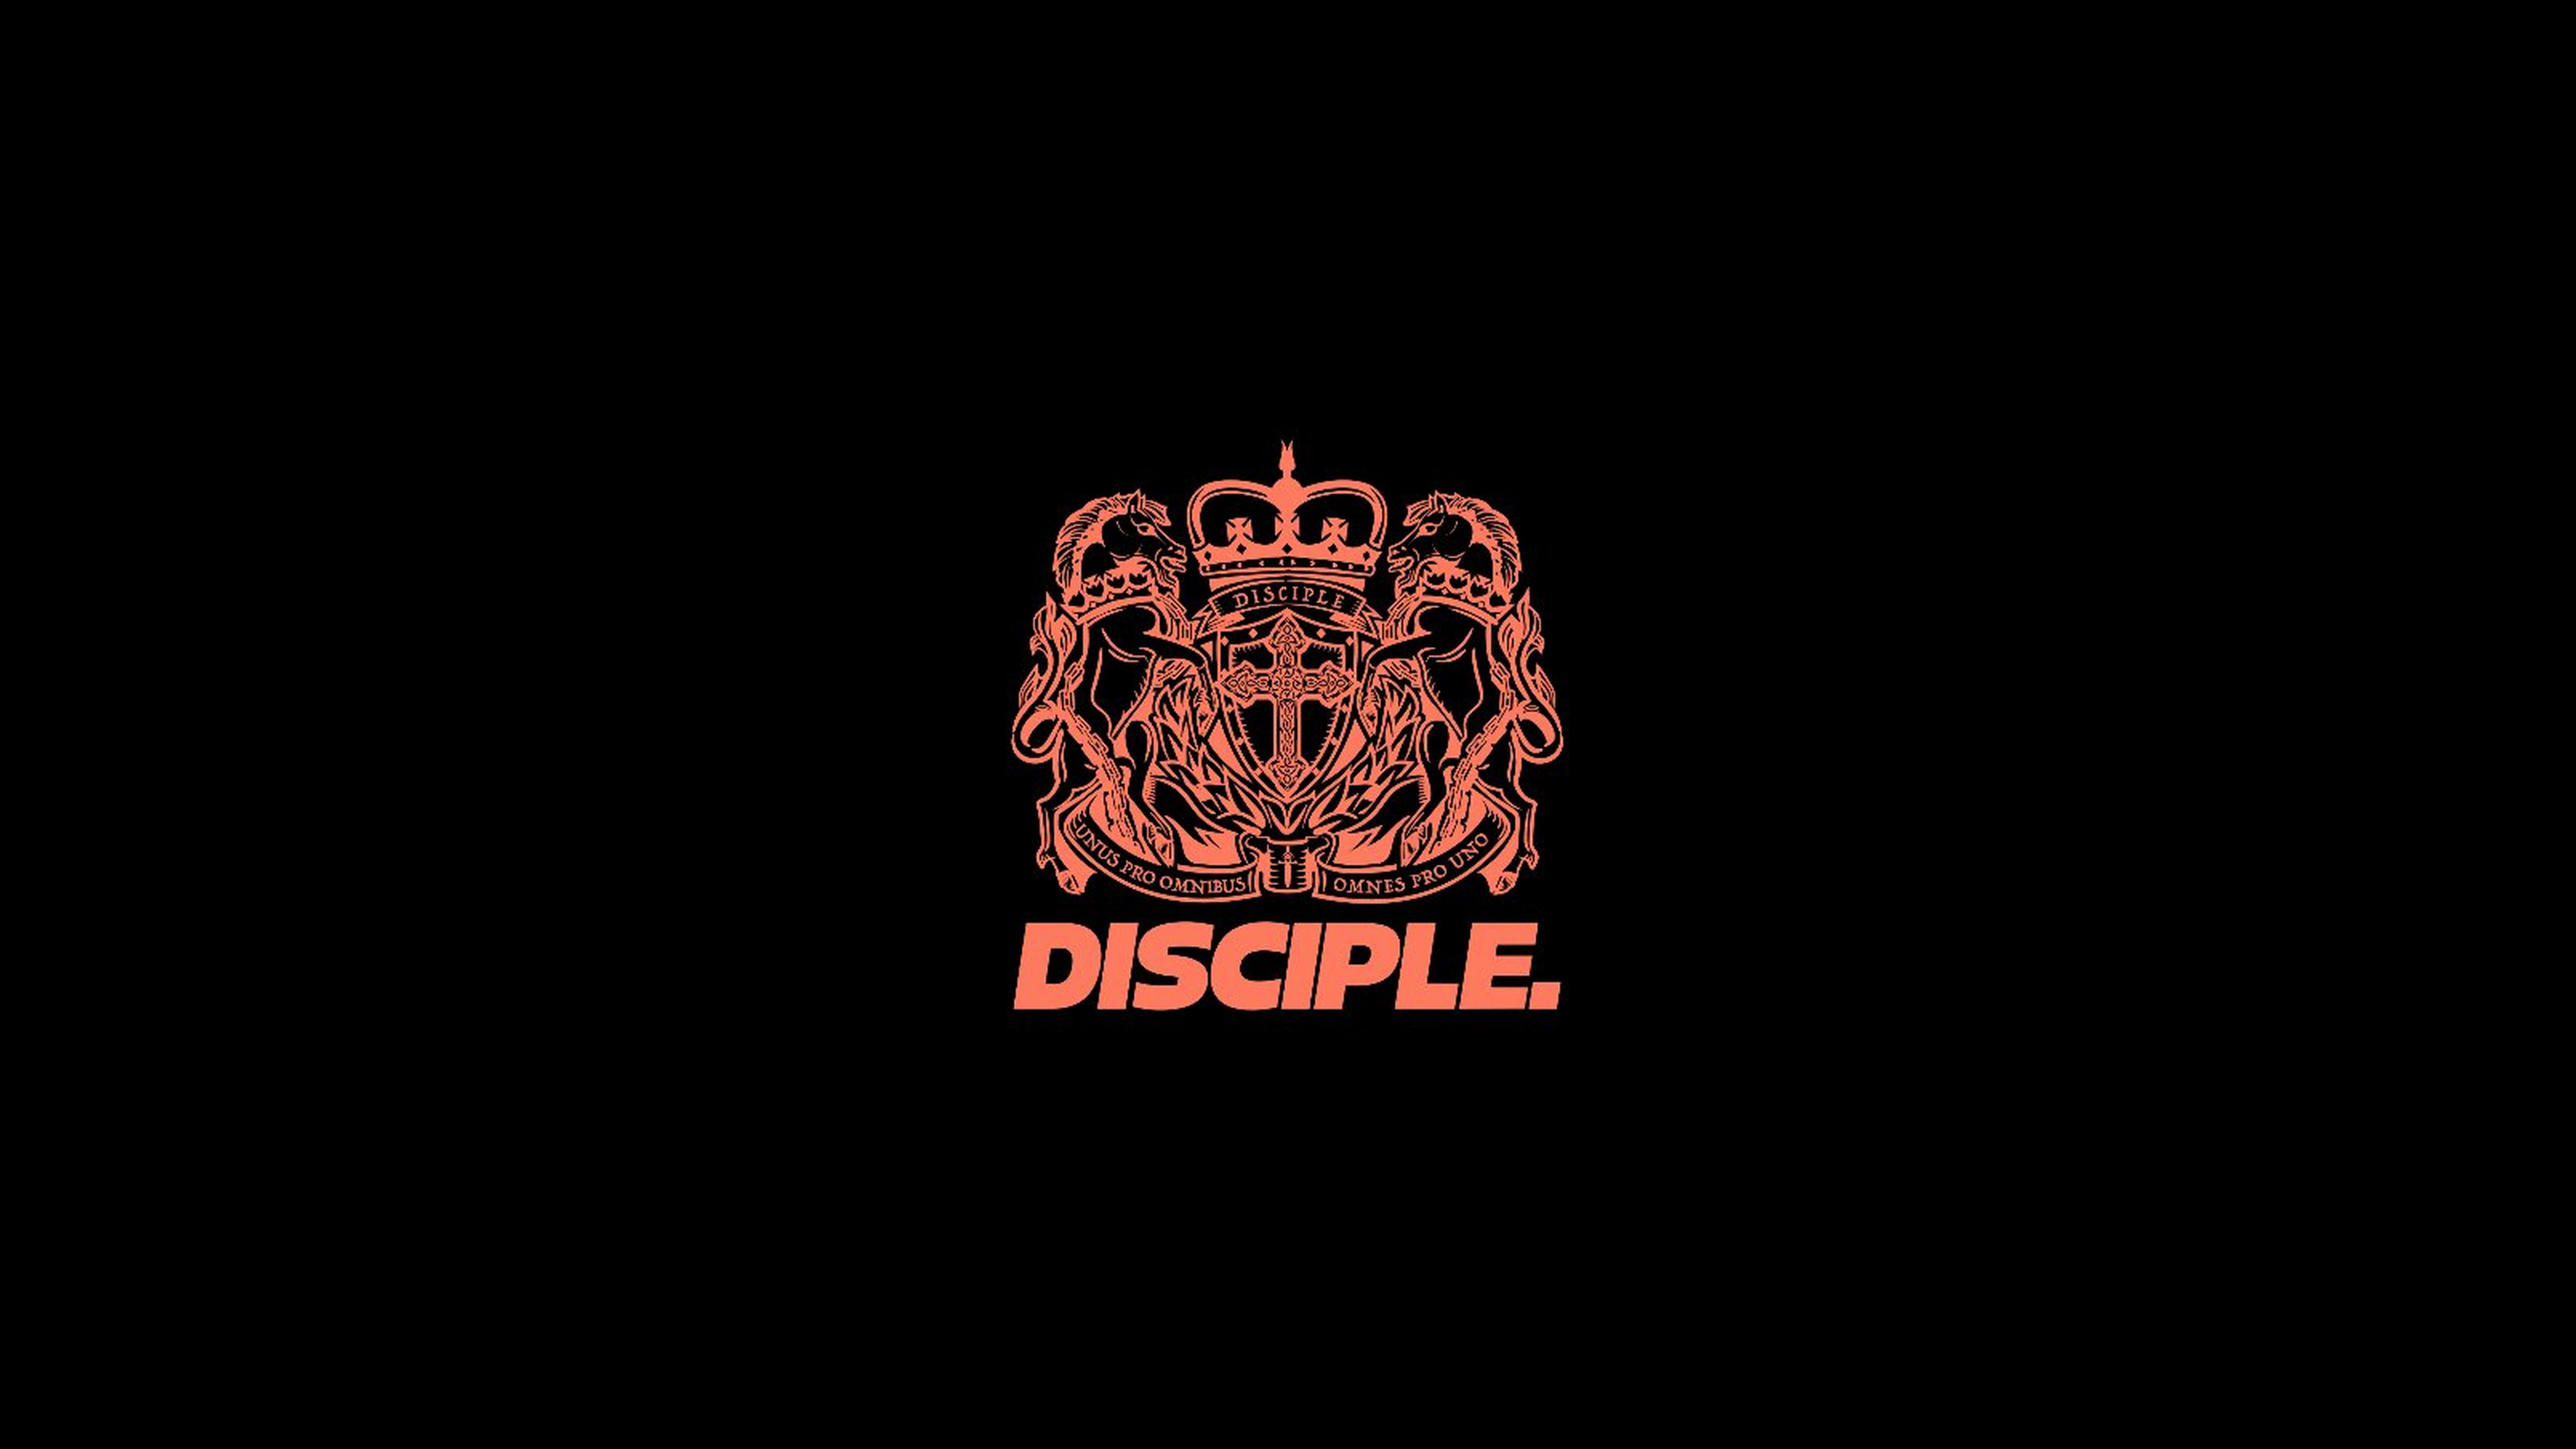 Disciple Logo - Wallpaper : disciple, music, dubstep, black background, white, logo ...